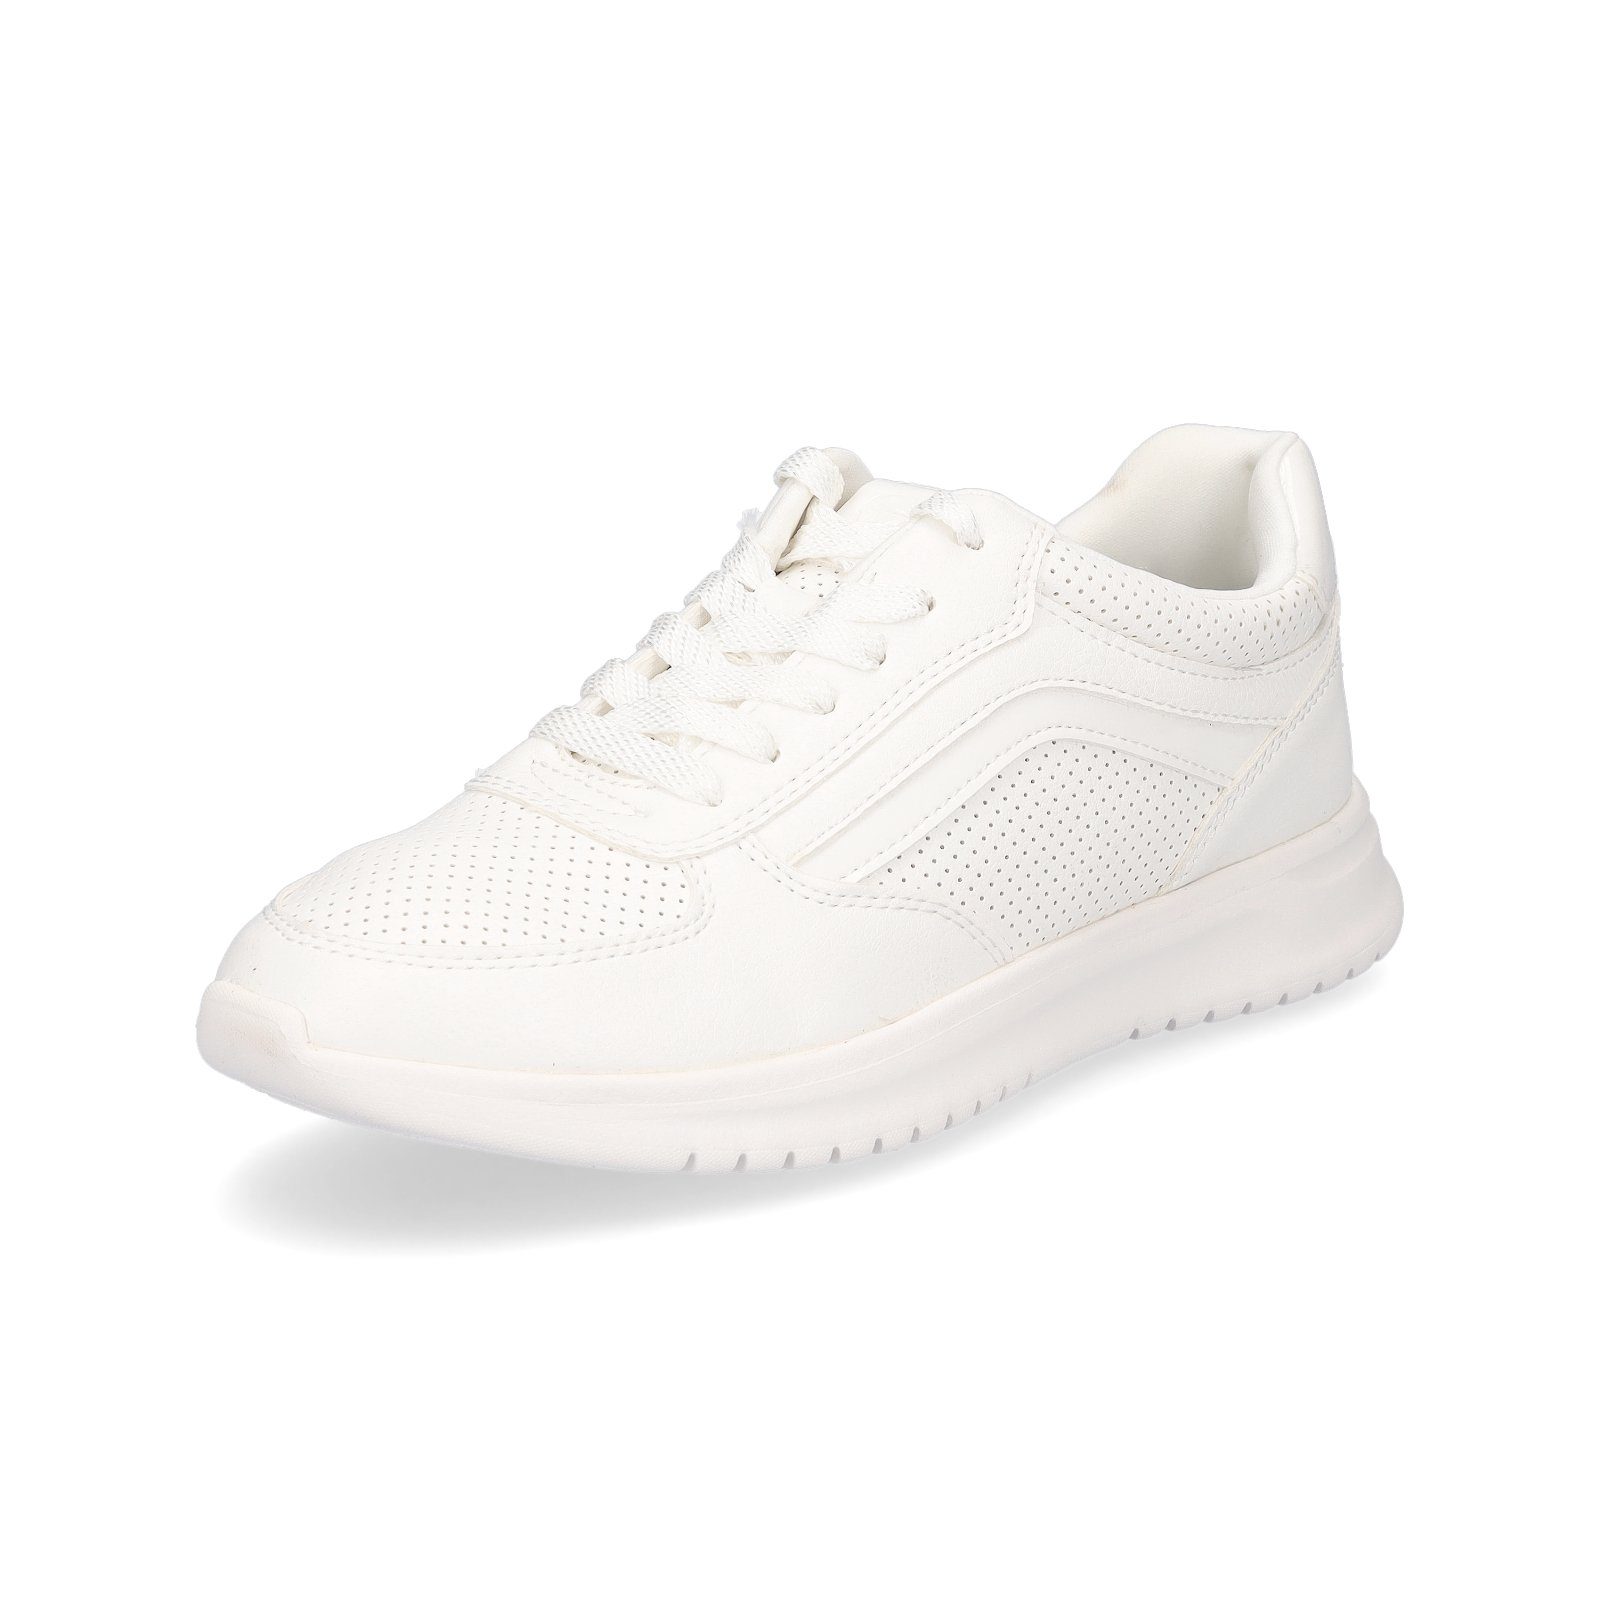 Tamaris Tamaris Damen Sneaker weiß Lack Sneaker Weiß (WHITE PUNCH)